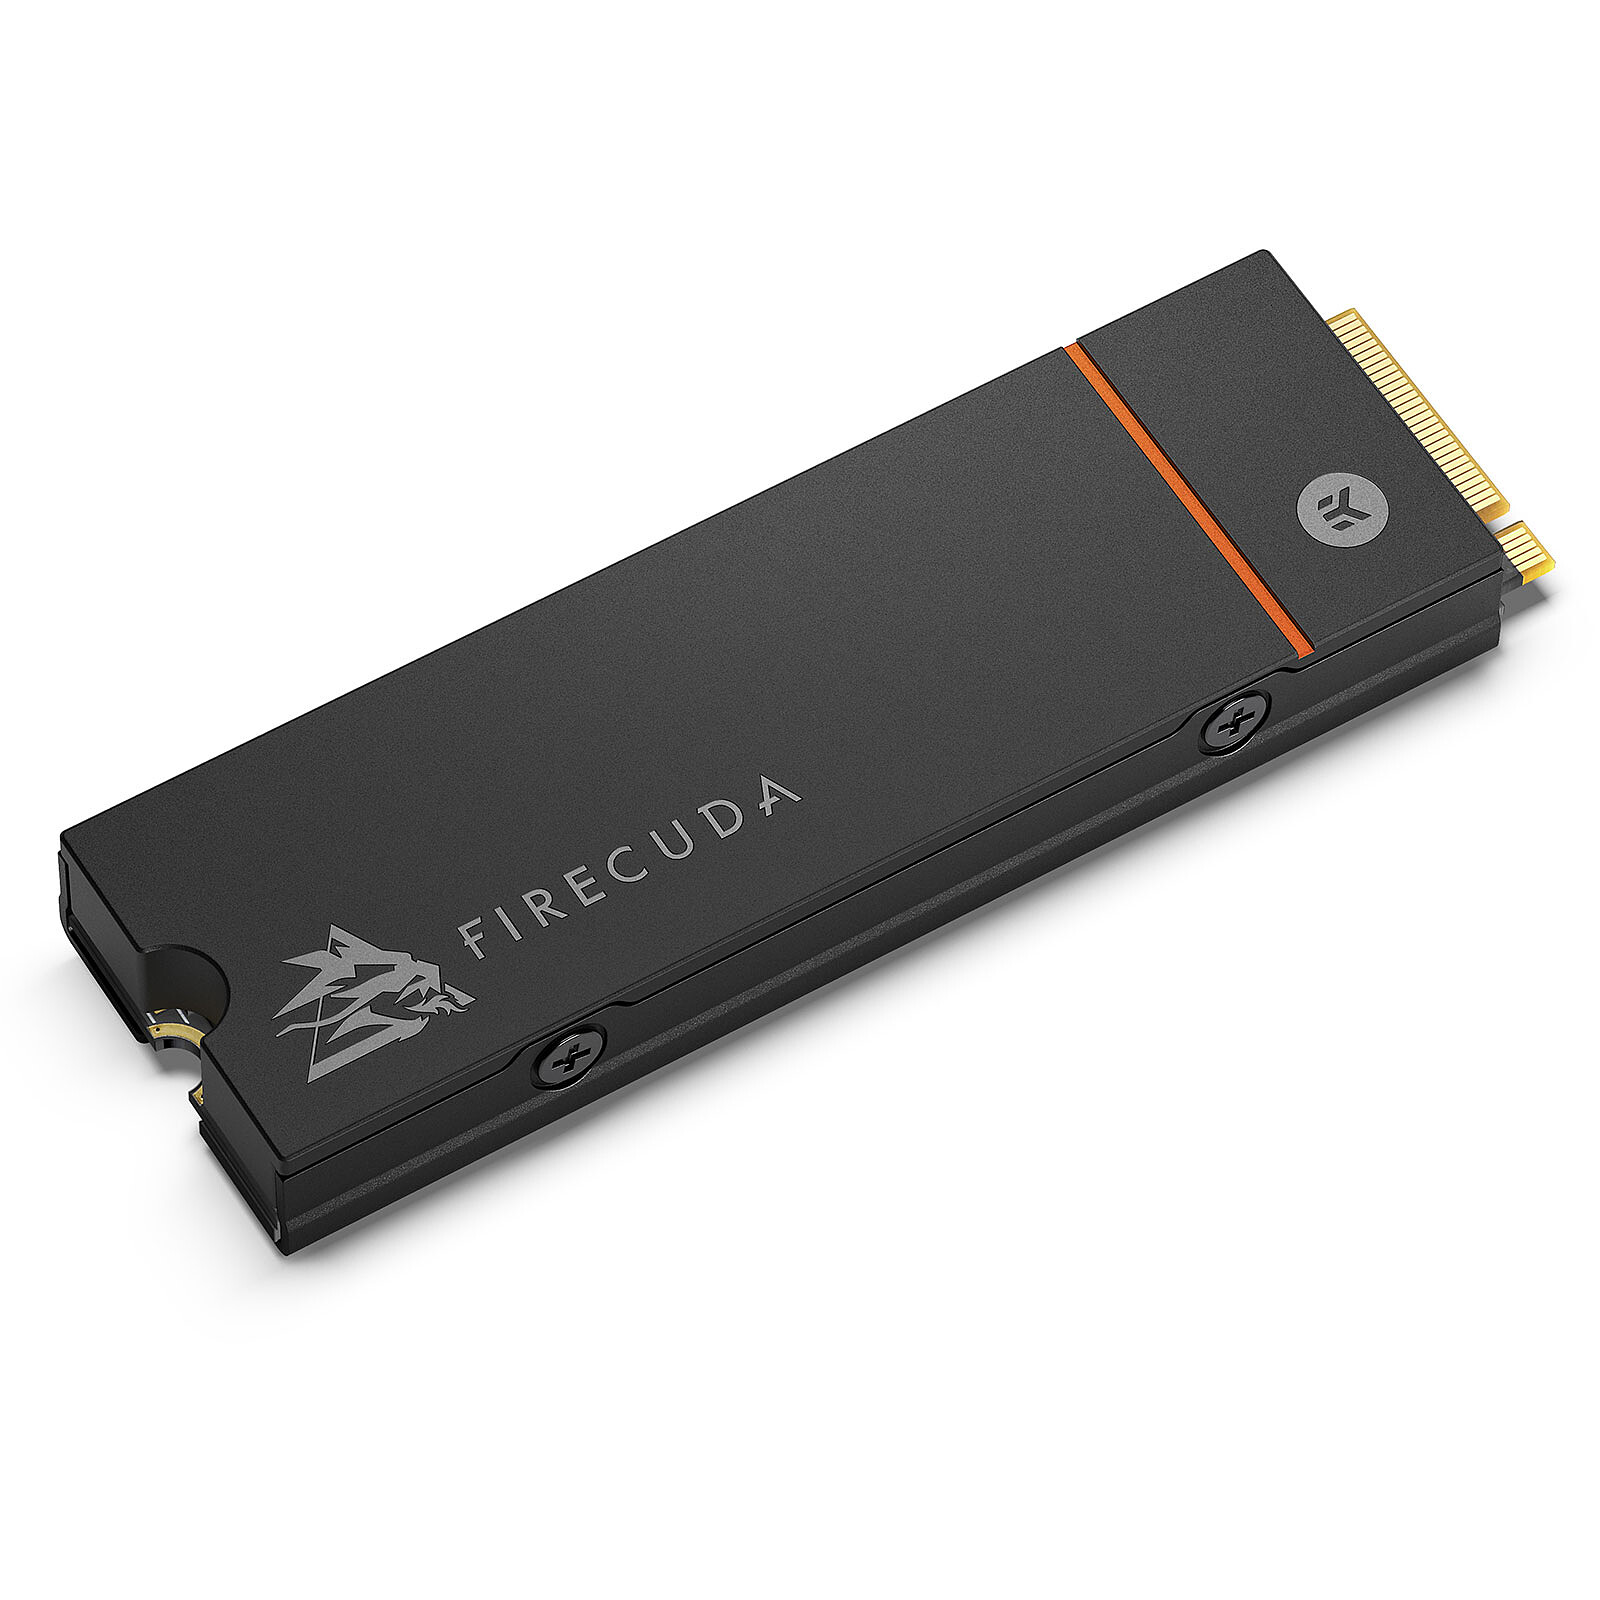 SSD Firecuda 1 To PS5 : voici la meilleure offre